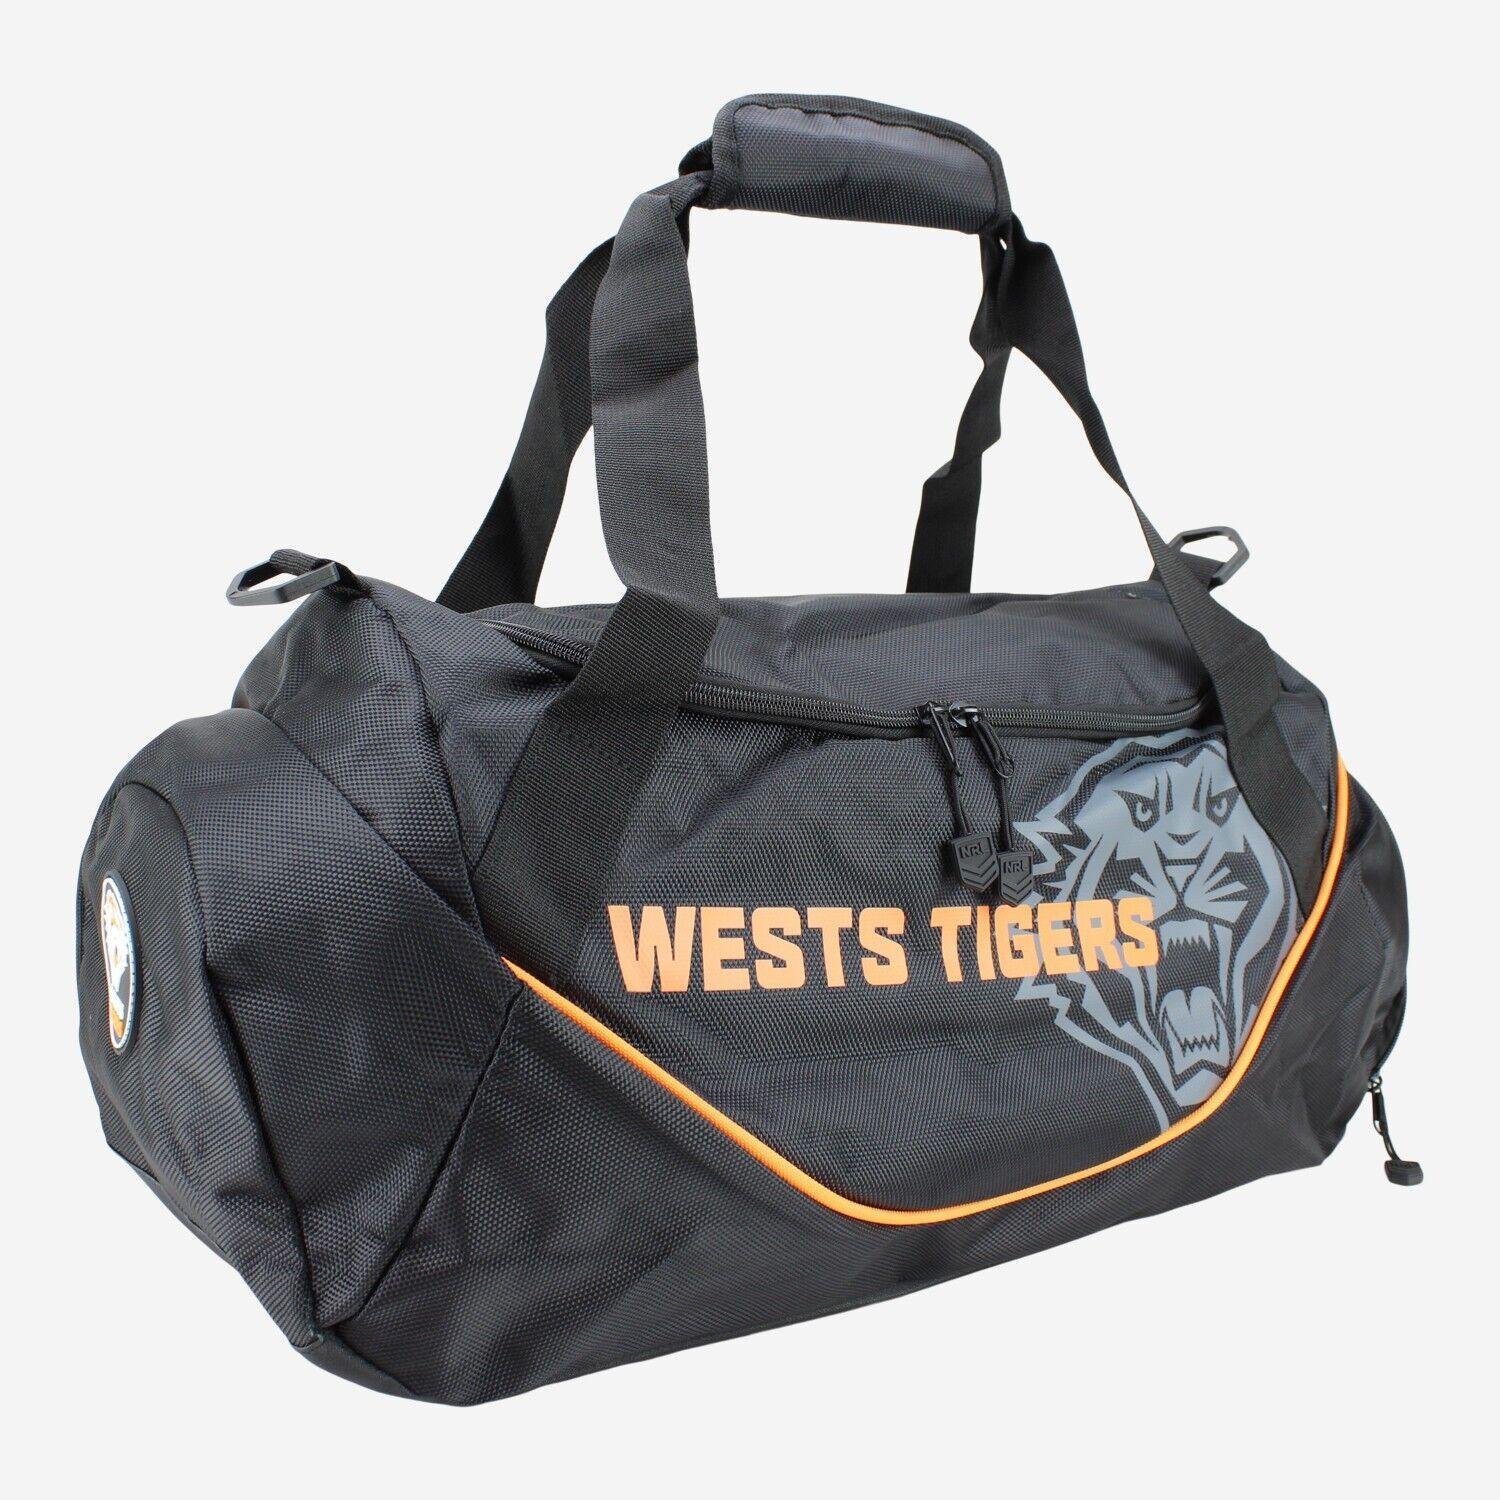 NRL Shadow Sports Bag - West Tigers - Gym Travel Duffle Bag